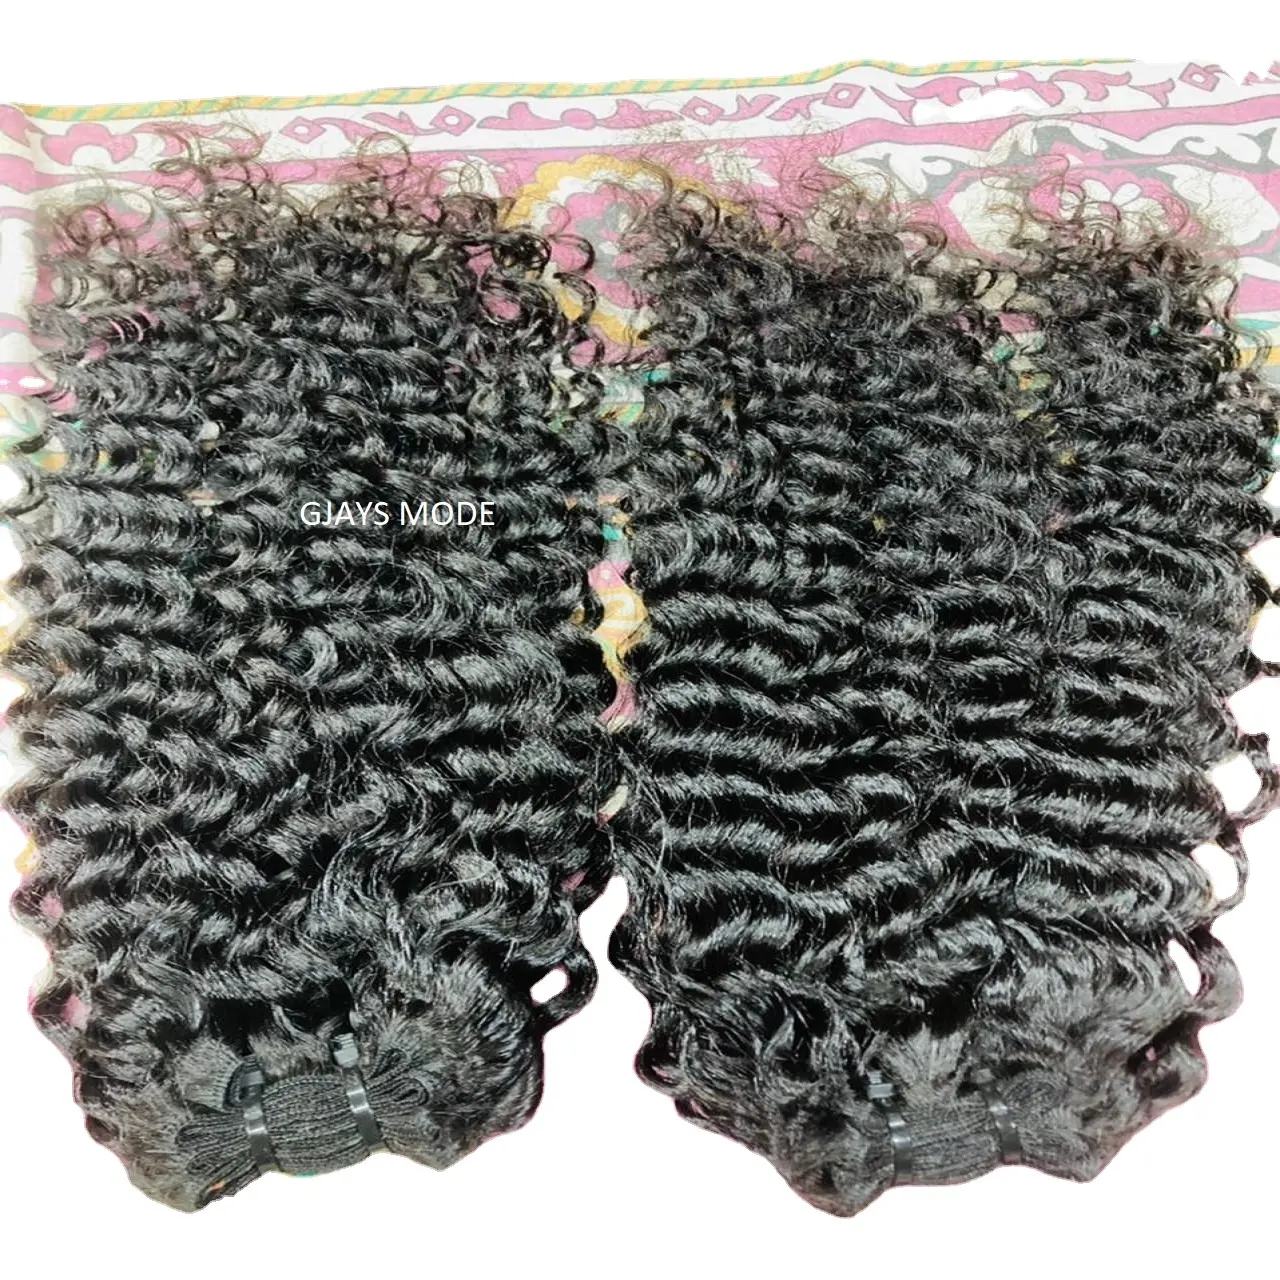 High quality raw southeast asian hair, wholesale raw single drawn virgin human hair, natural raw deep curly remy human hair